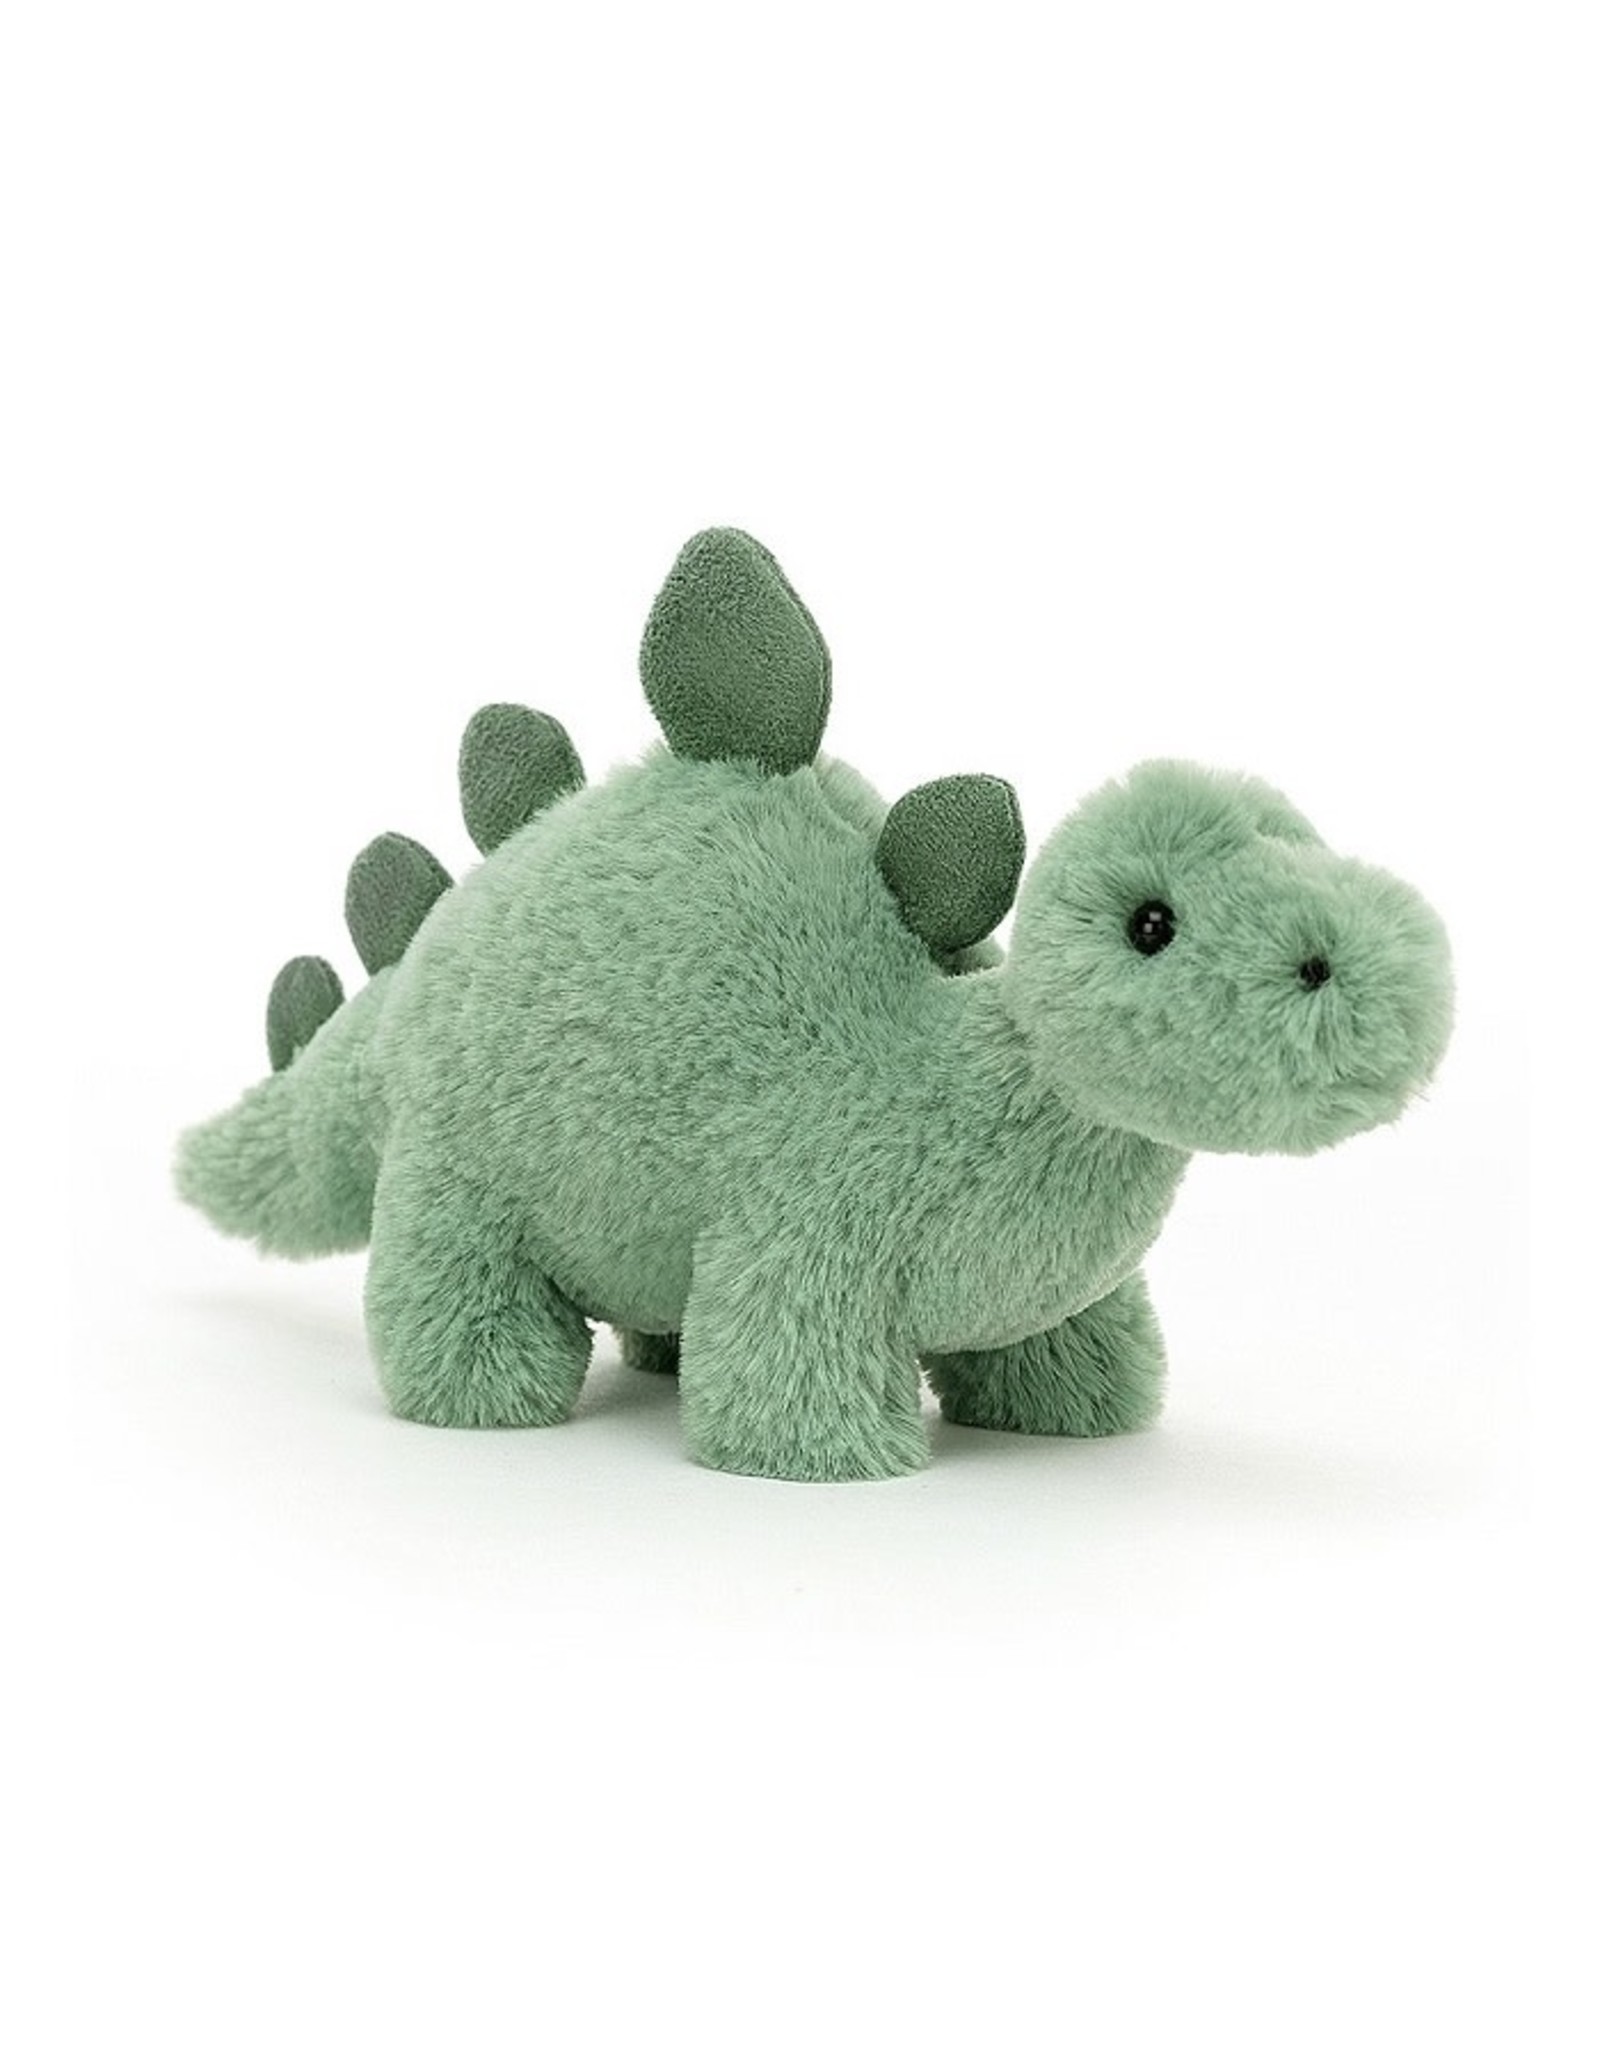 Jellycat Fossilly Stegosaurus Mini